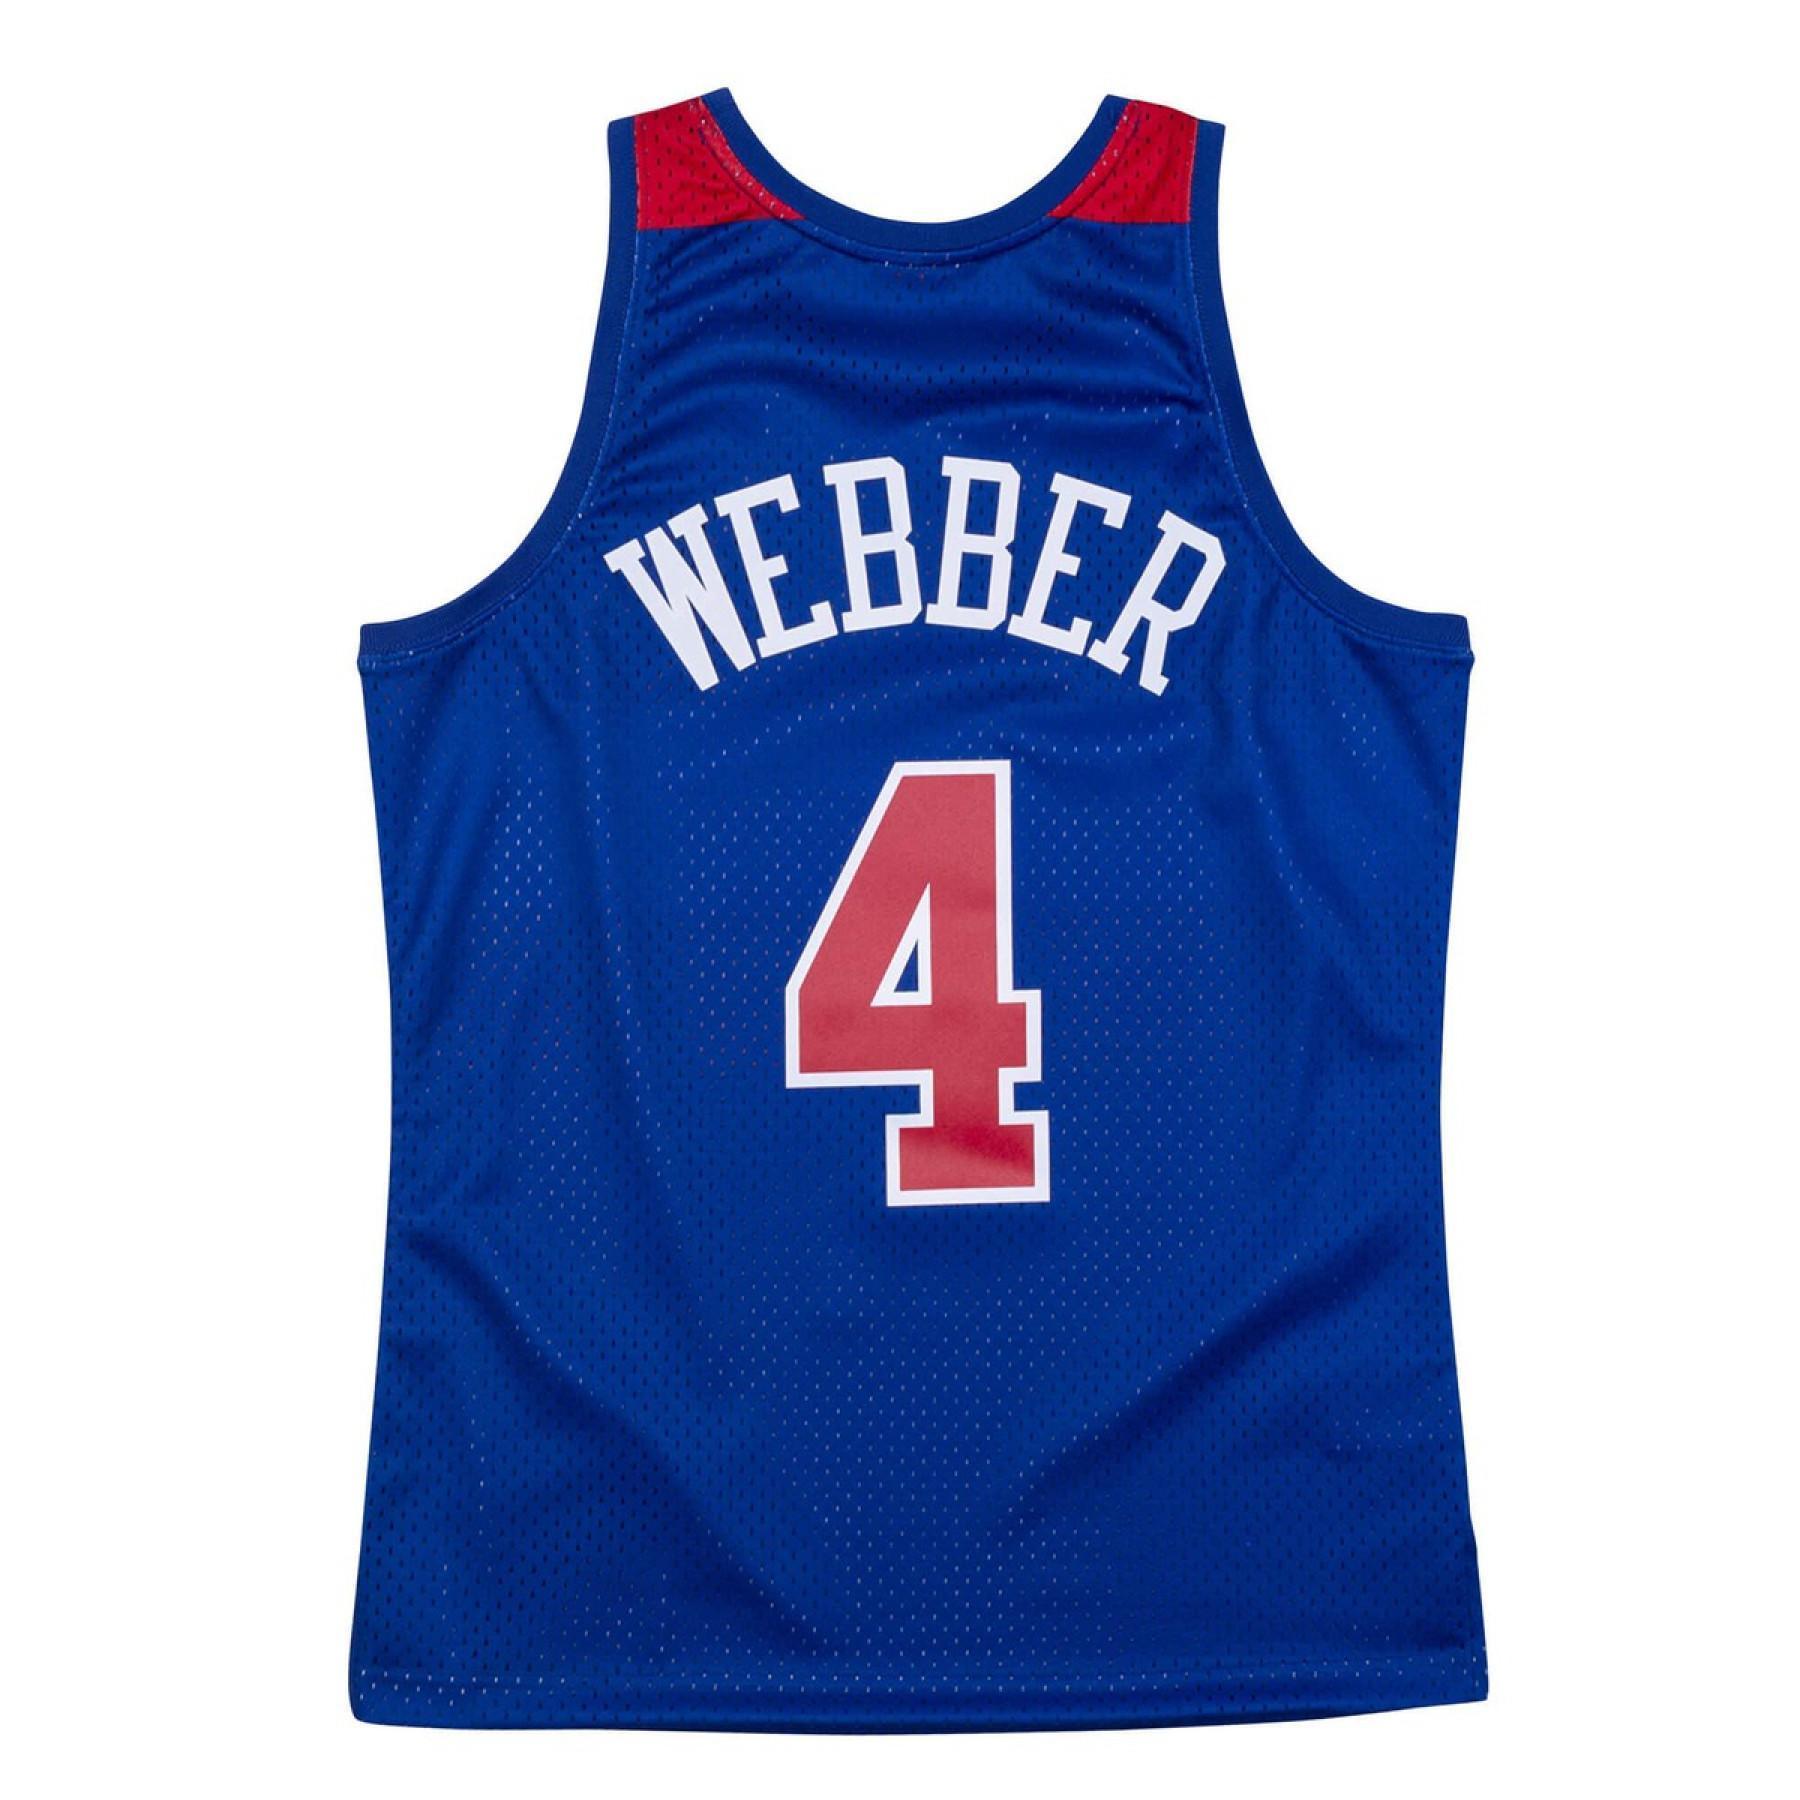 Jersey Washington Bullets Chris Webber